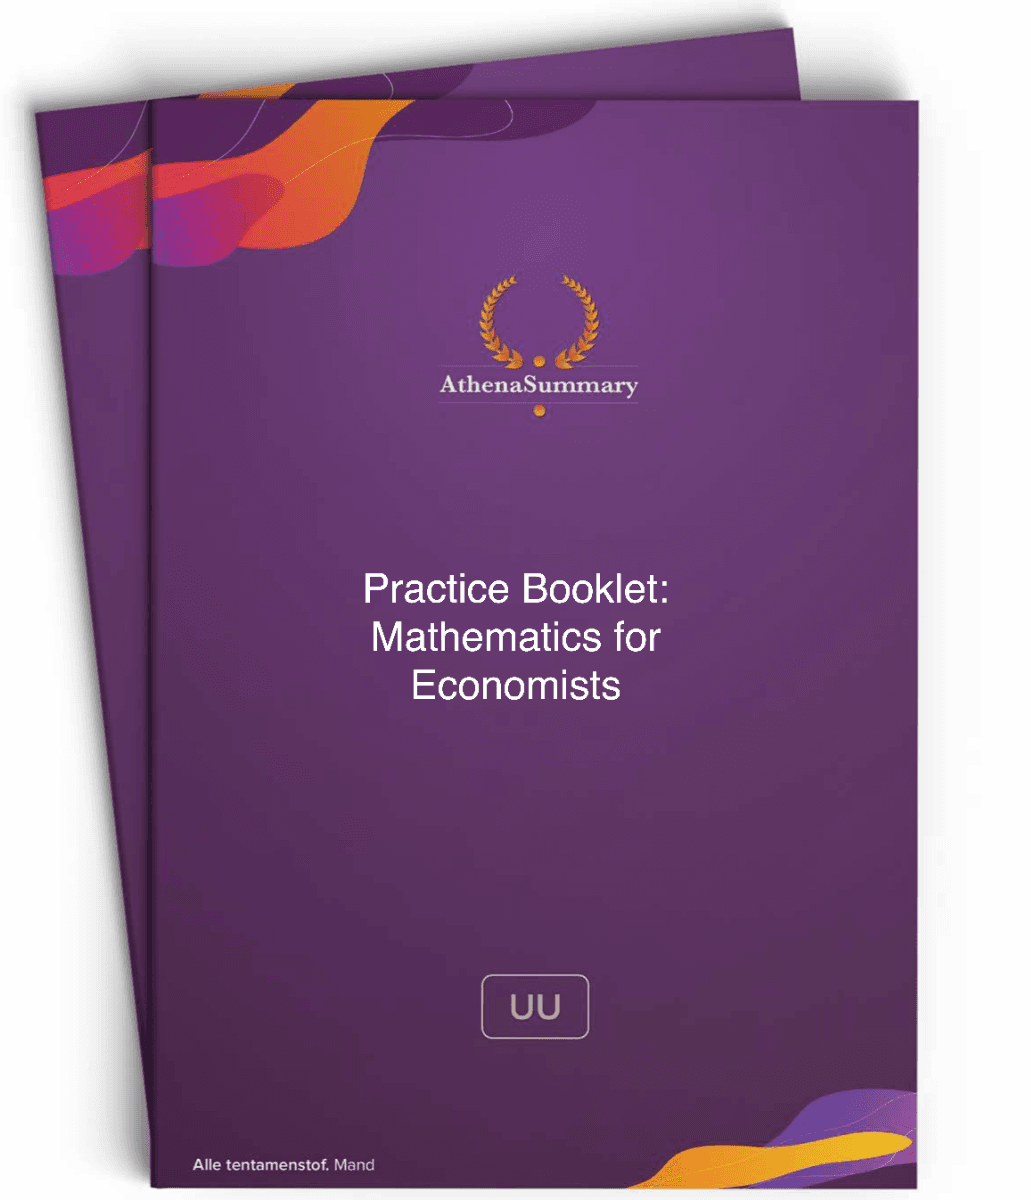 Practice Booklet: Mathematics for Economists